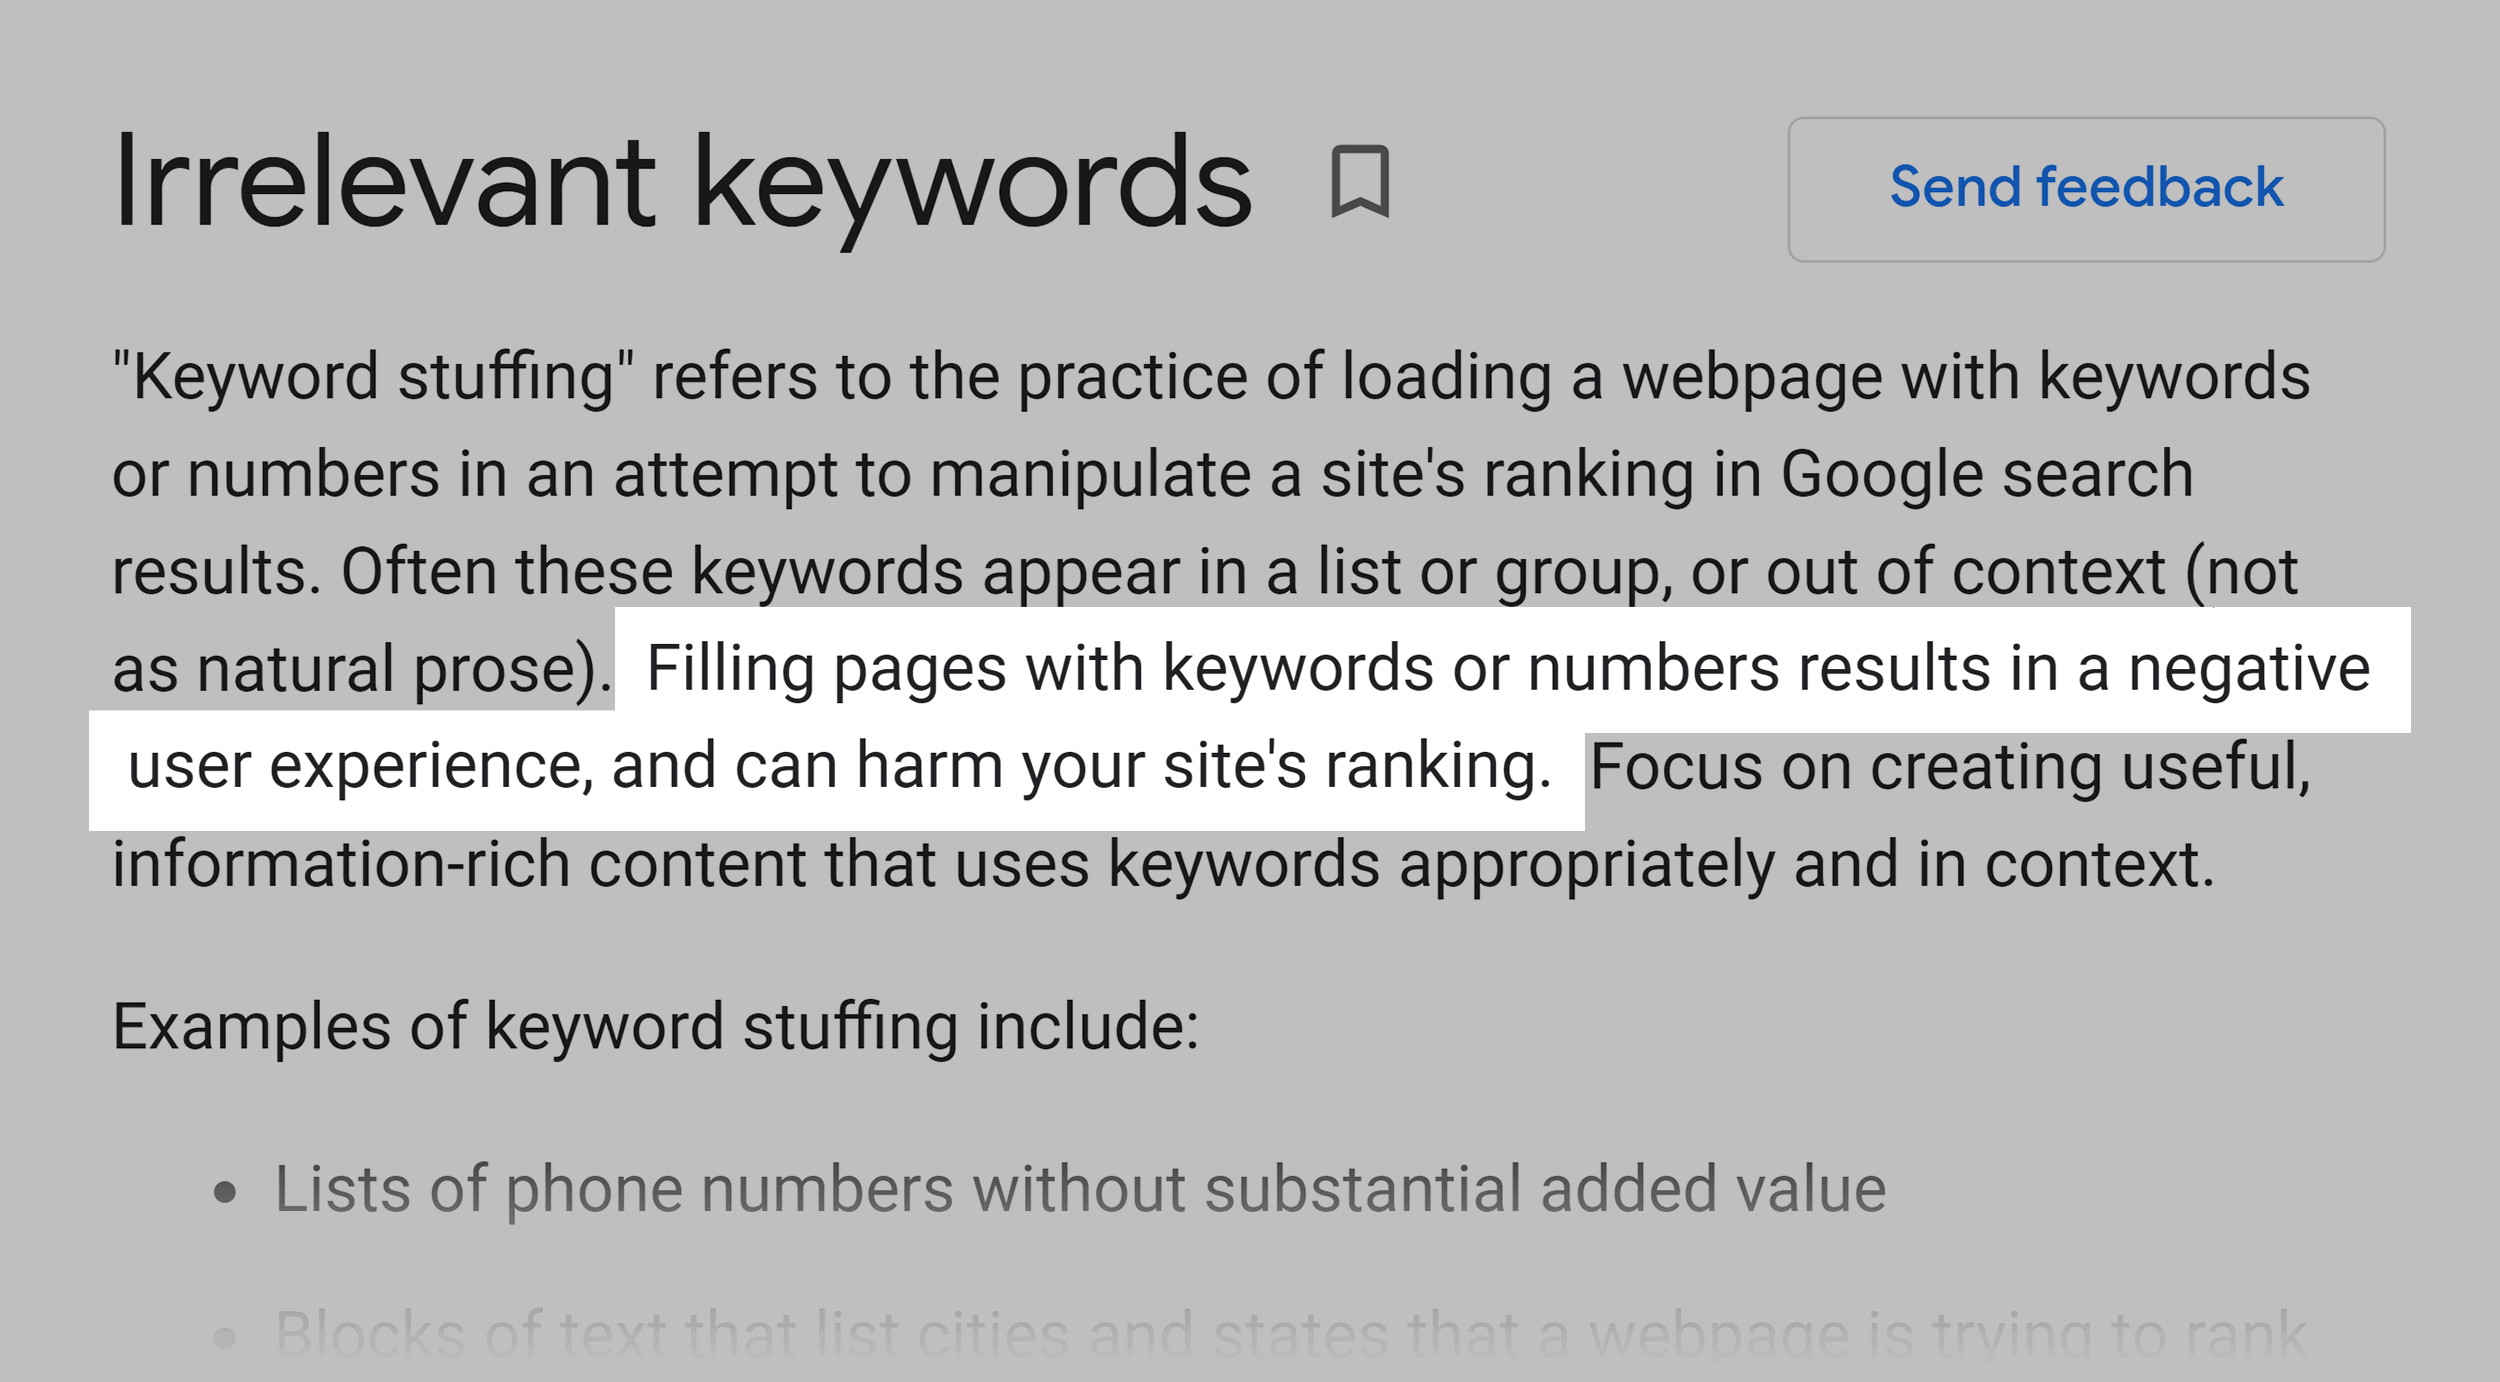 Google guidelines – Irrelevant keywords